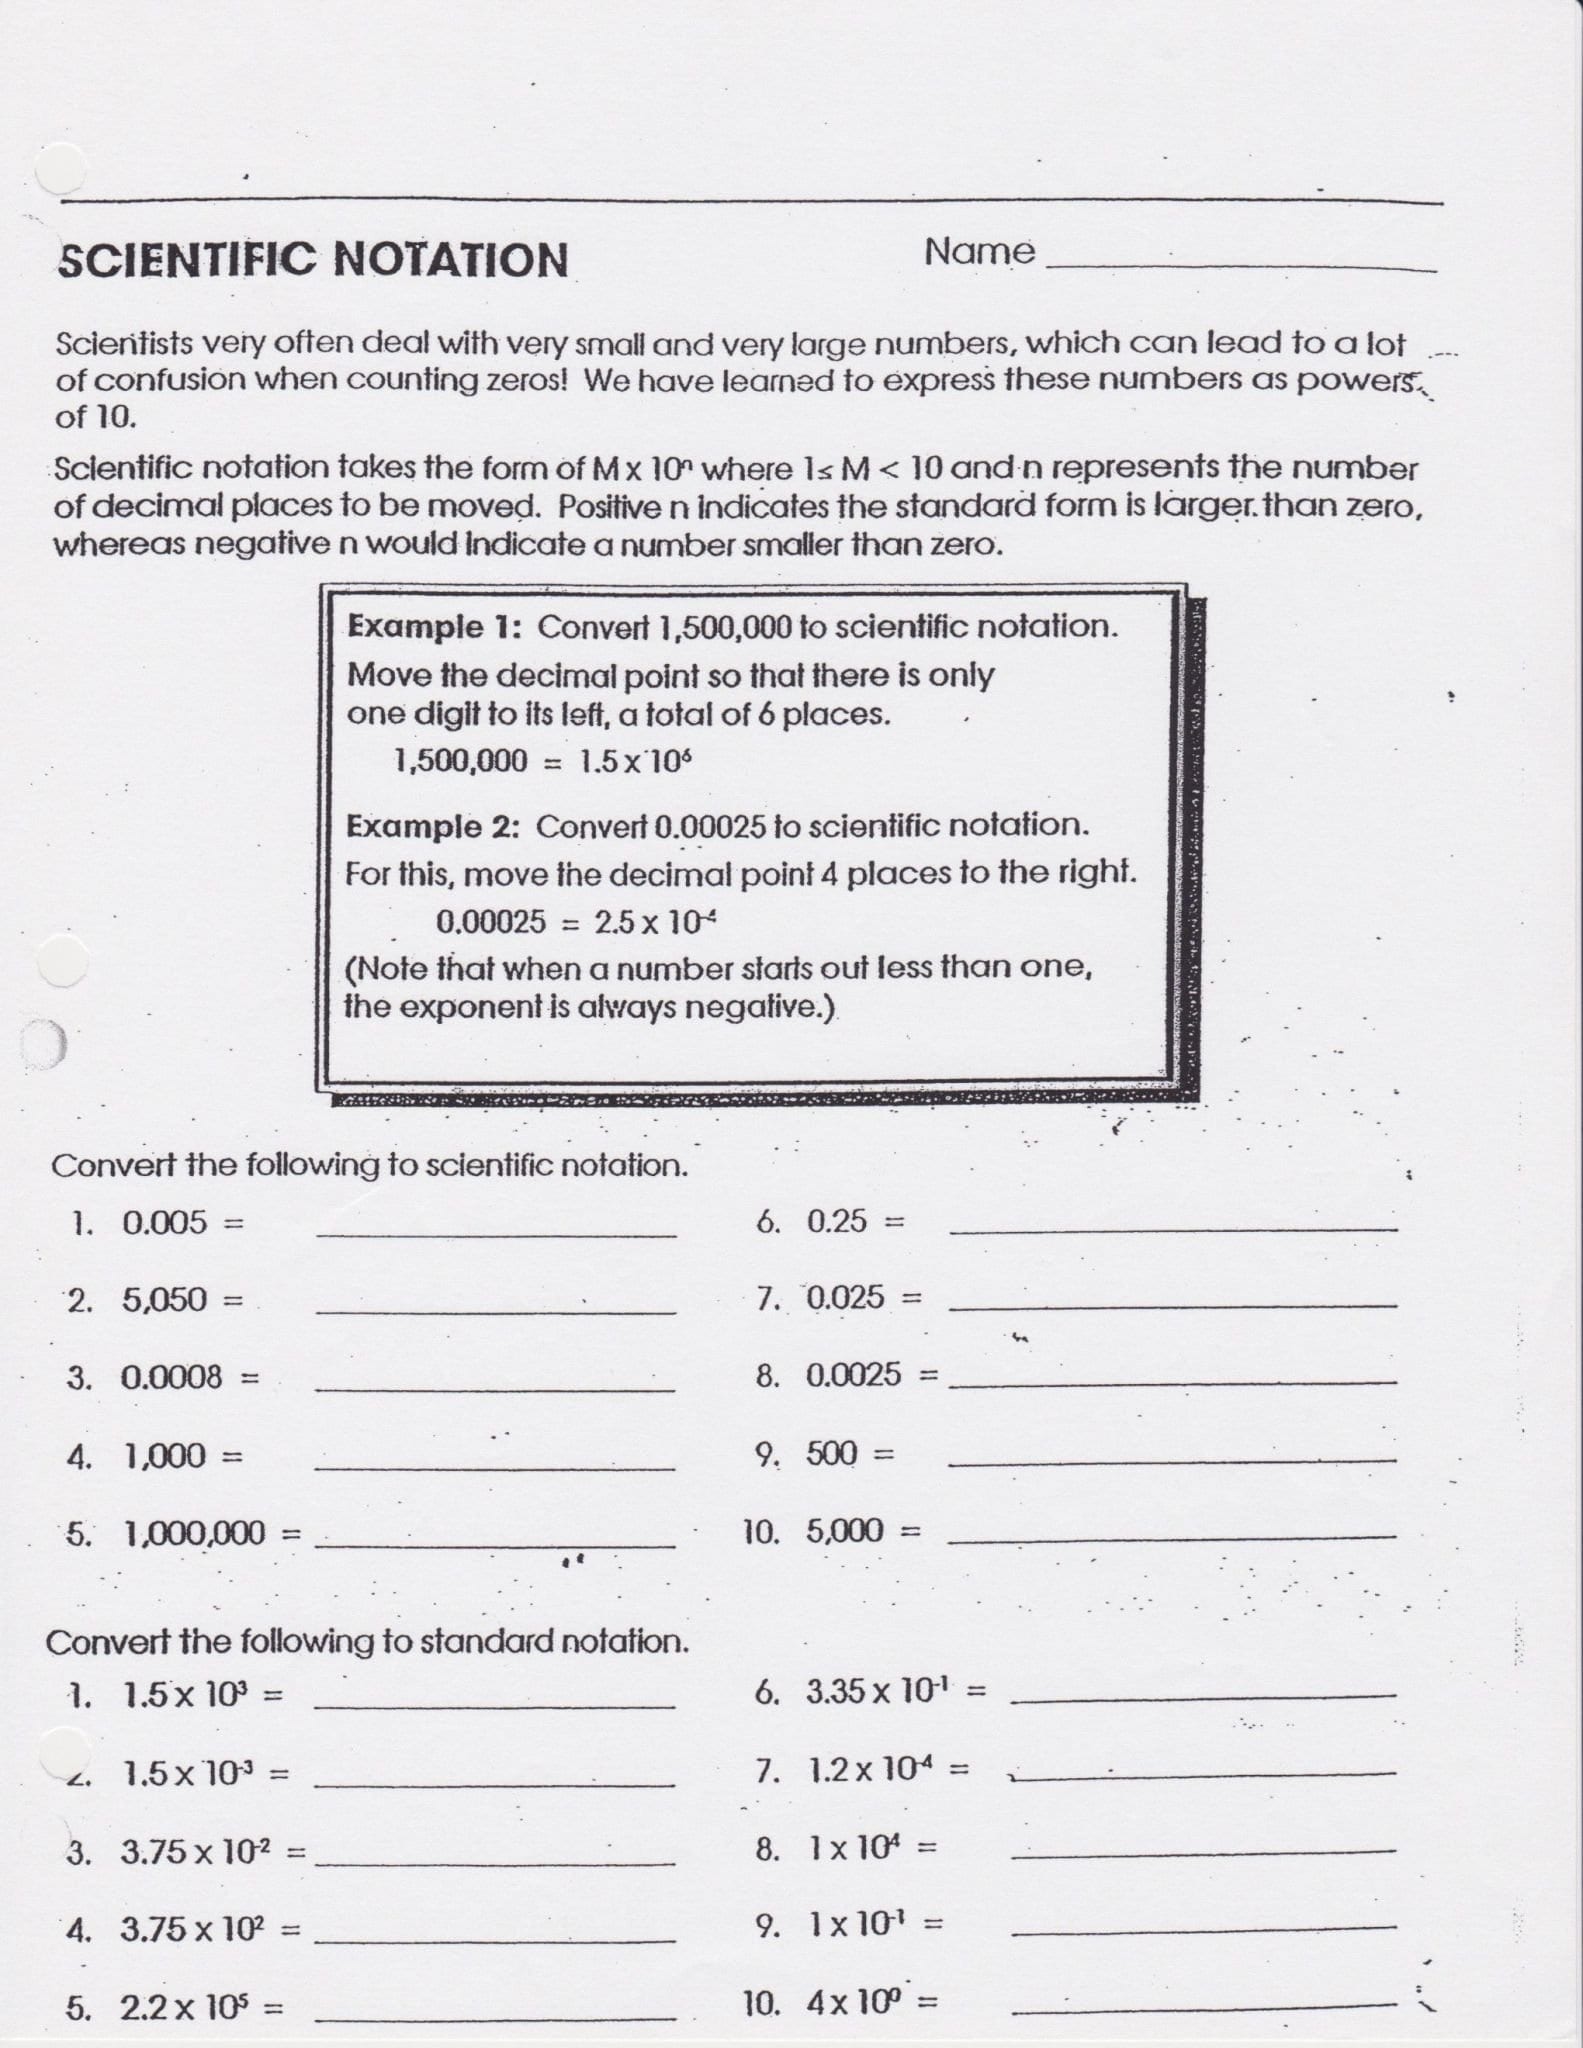 11 Scientific Notation Worksheet Chemistry  Paycheck Stubs Intended For Scientific Notation Worksheet Chemistry